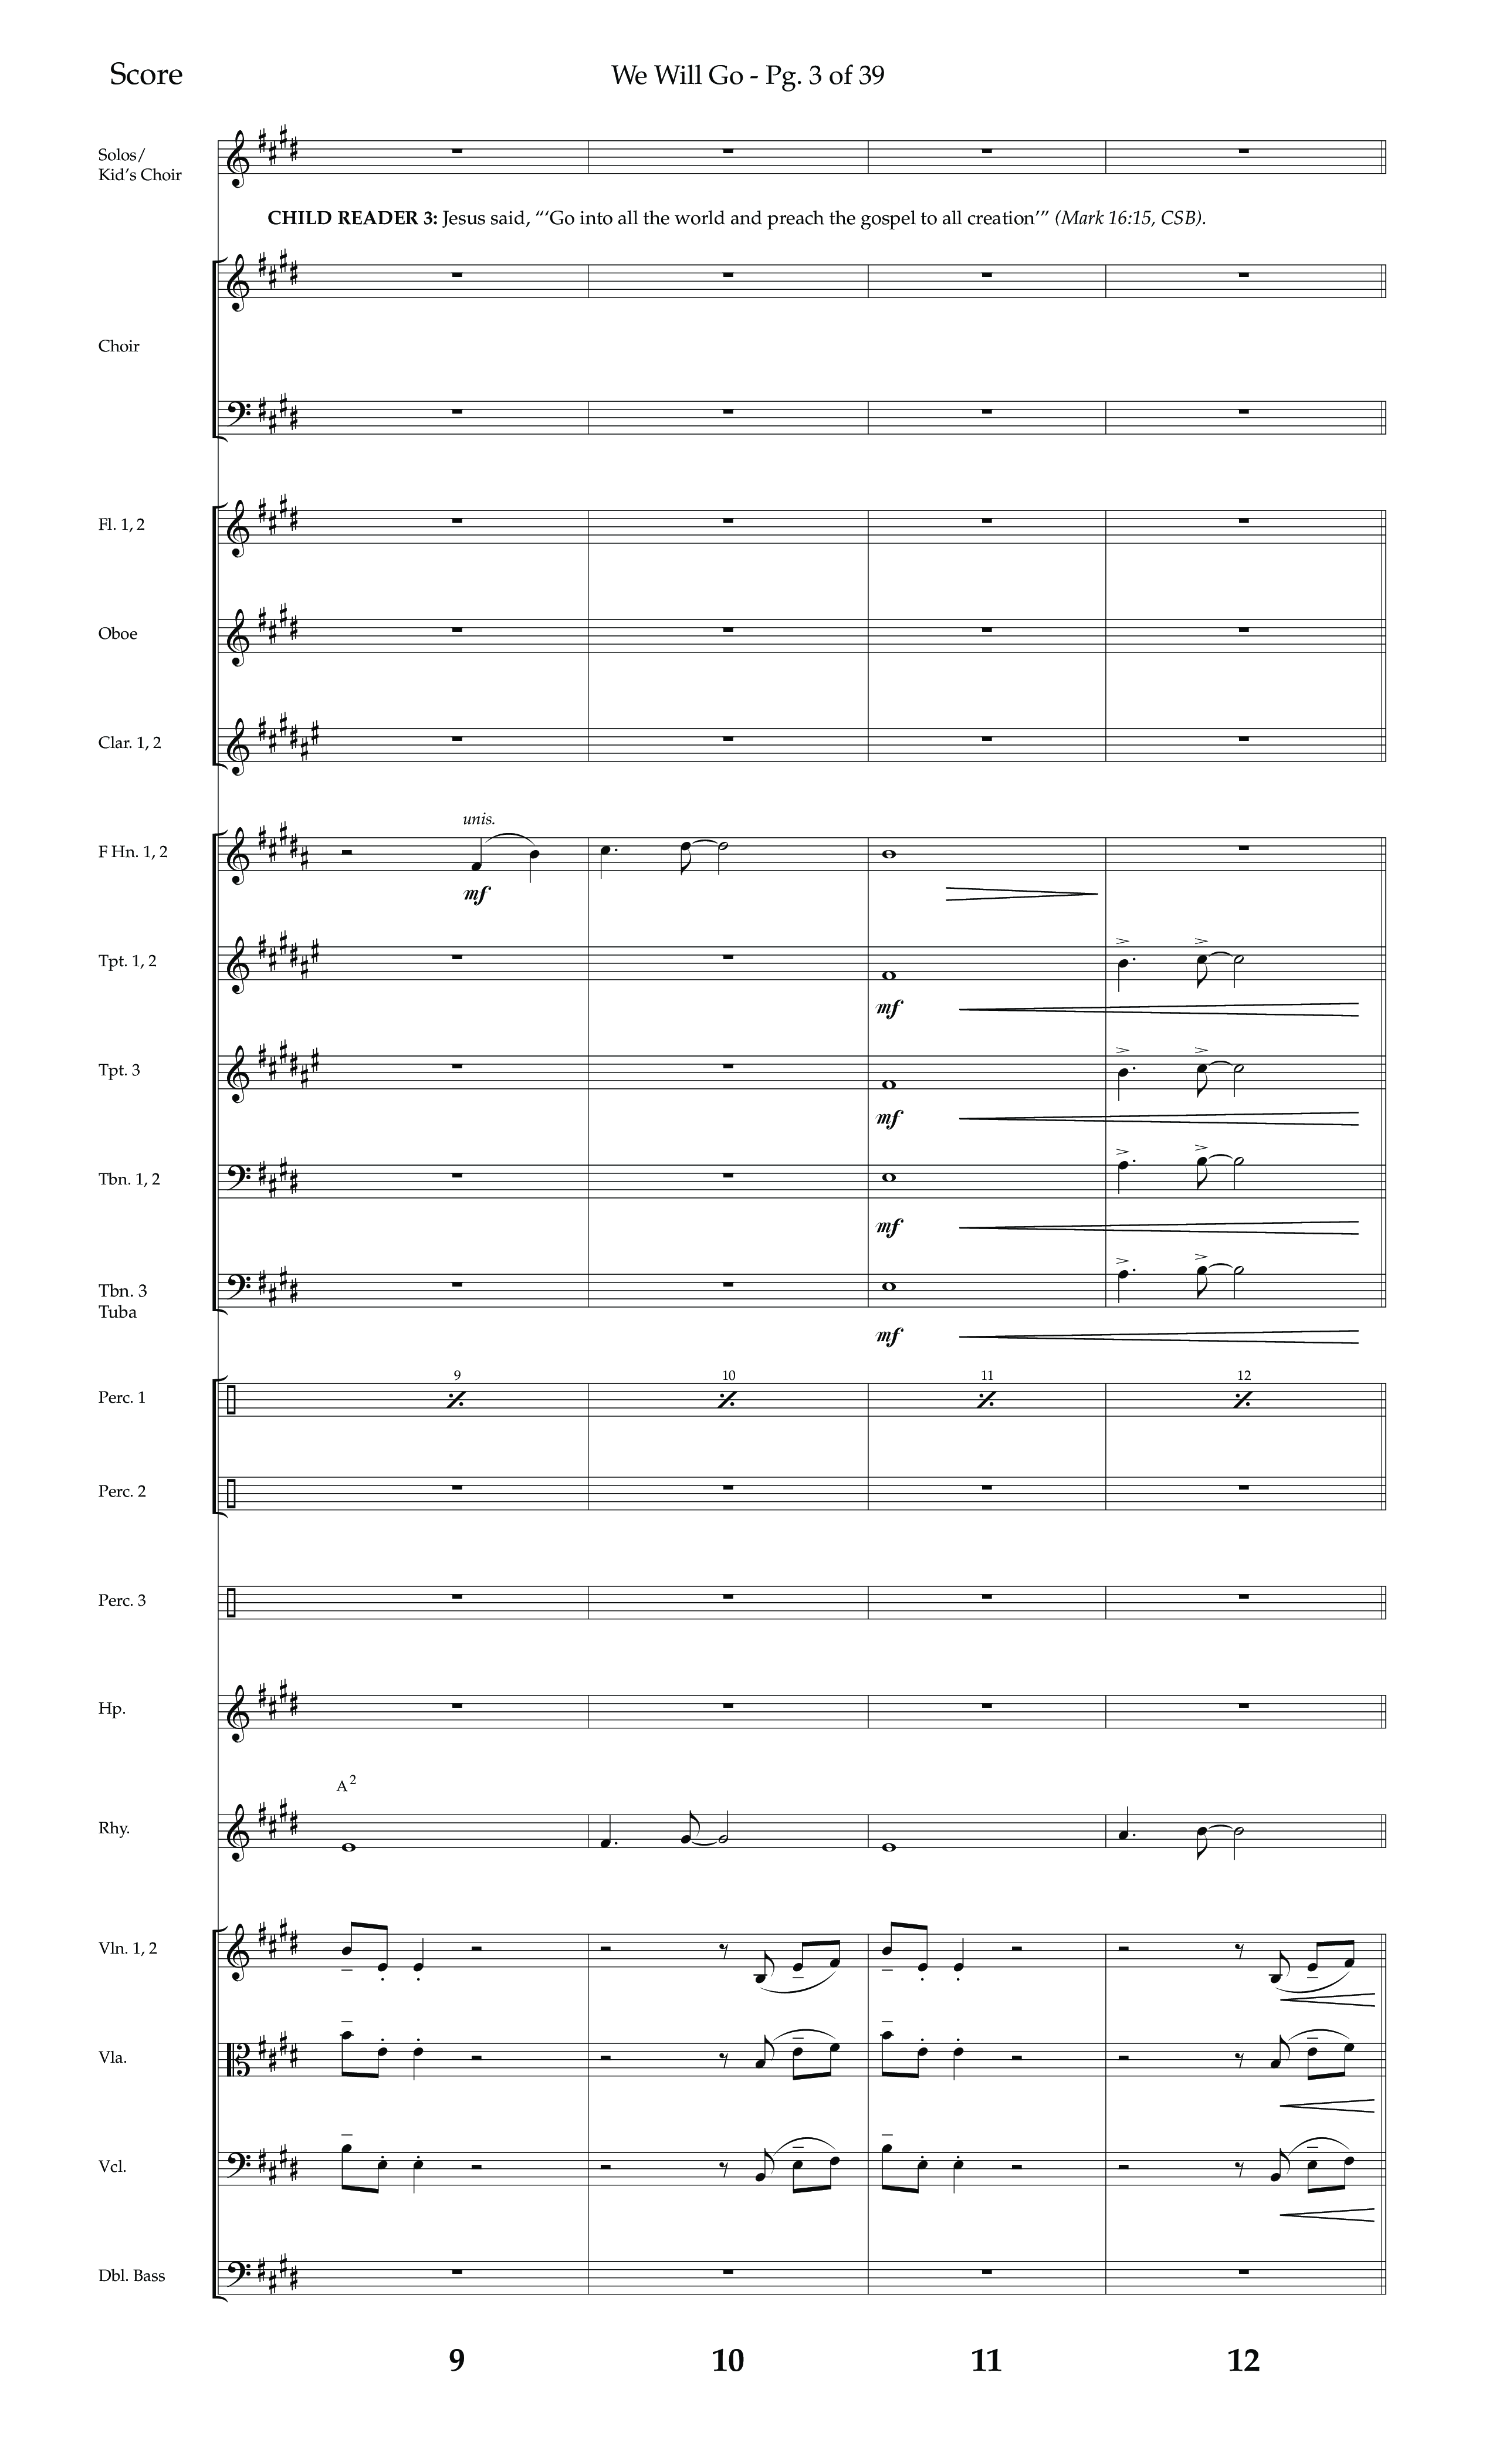 We Will Go (Choral Anthem SATB) Conductor's Score (Lifeway Choral / Arr. Cliff Duren)